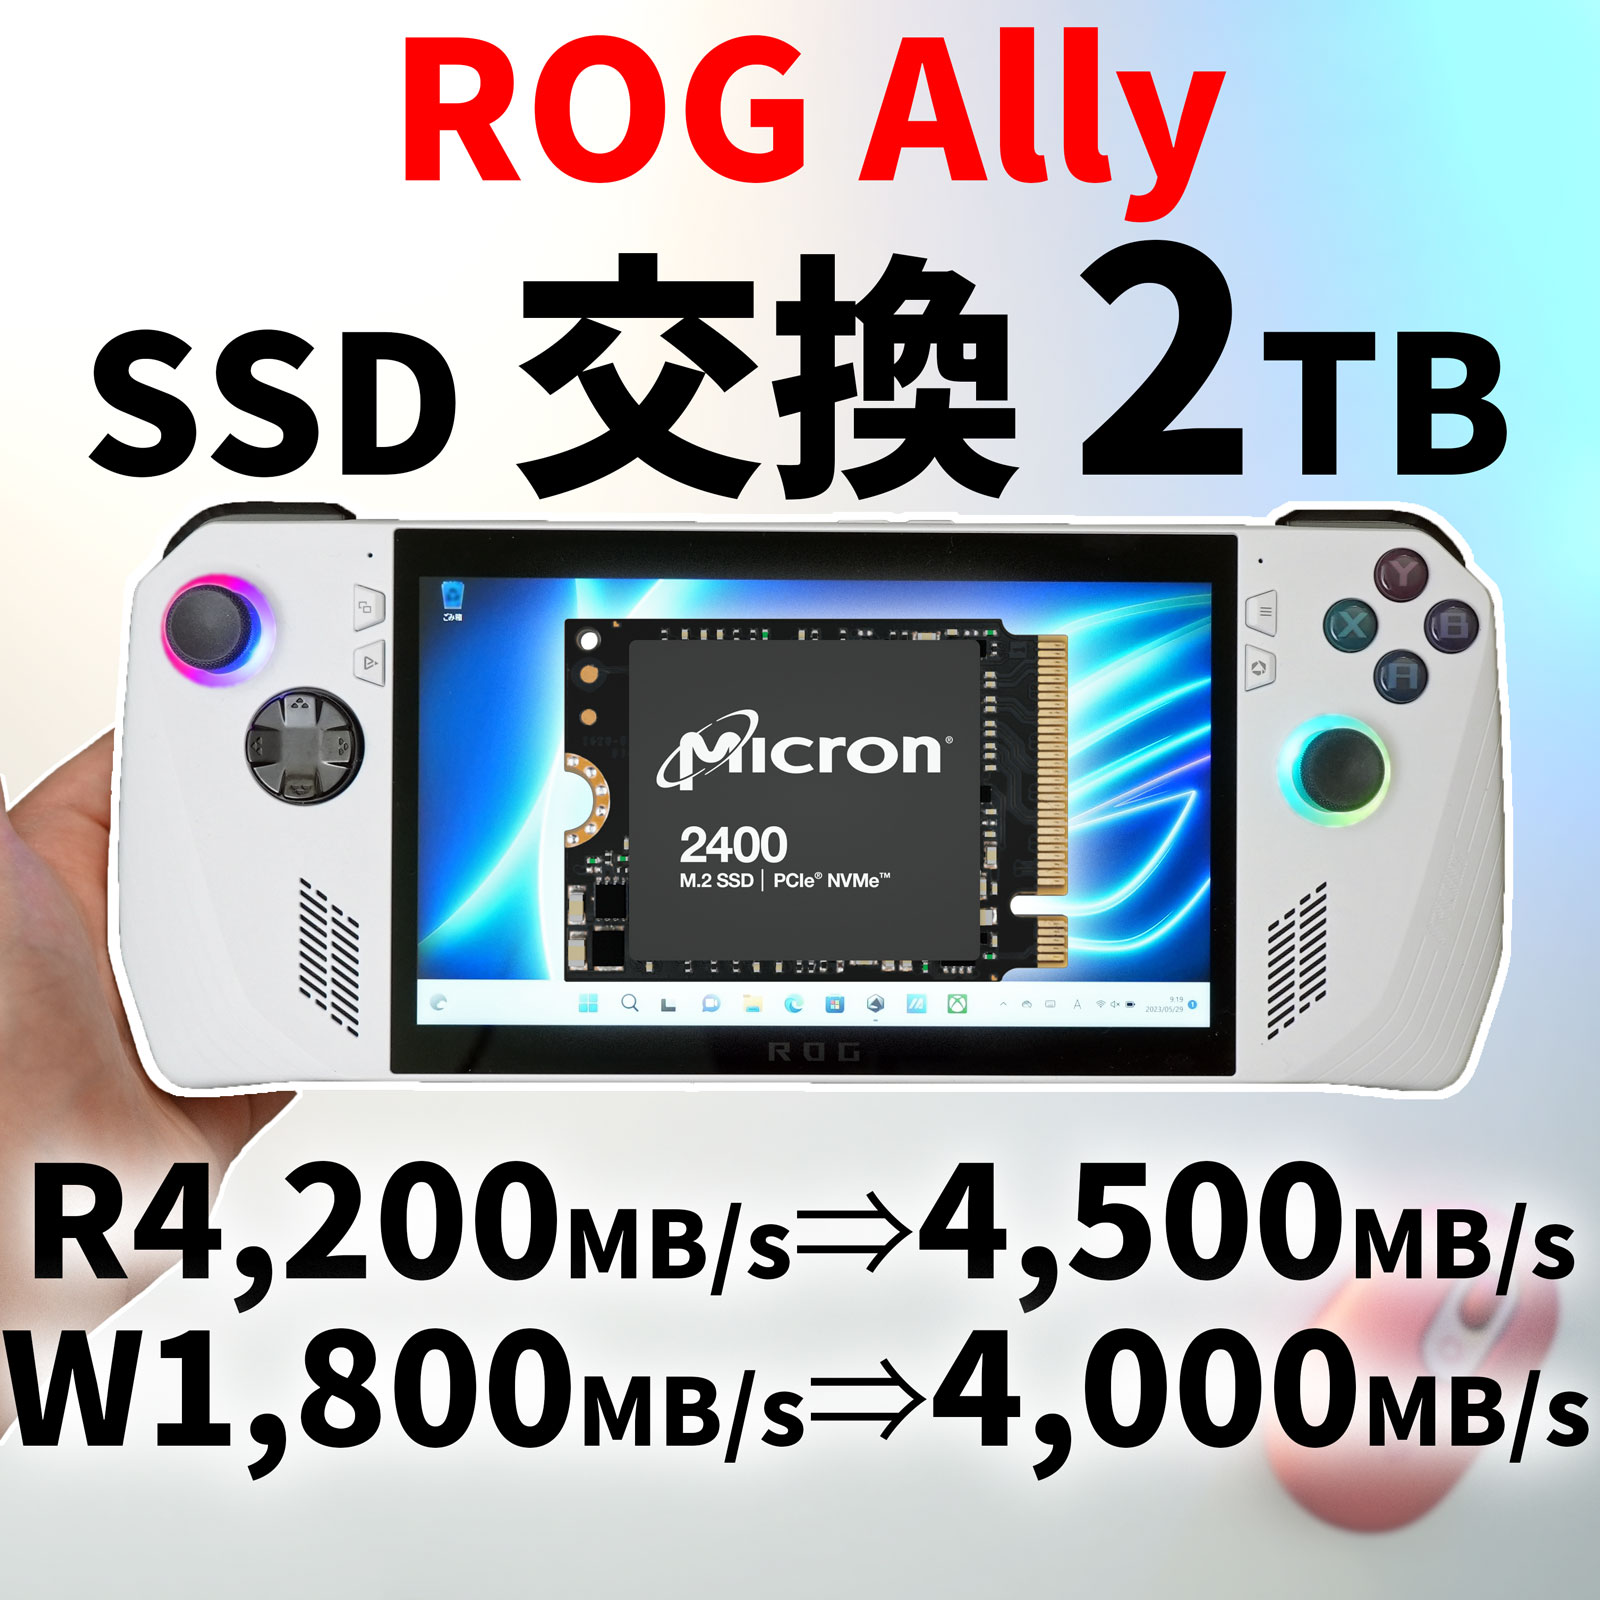 ROG ally】2TBにM2SSD 携帯ゲーミングPC - 家庭用ゲーム本体